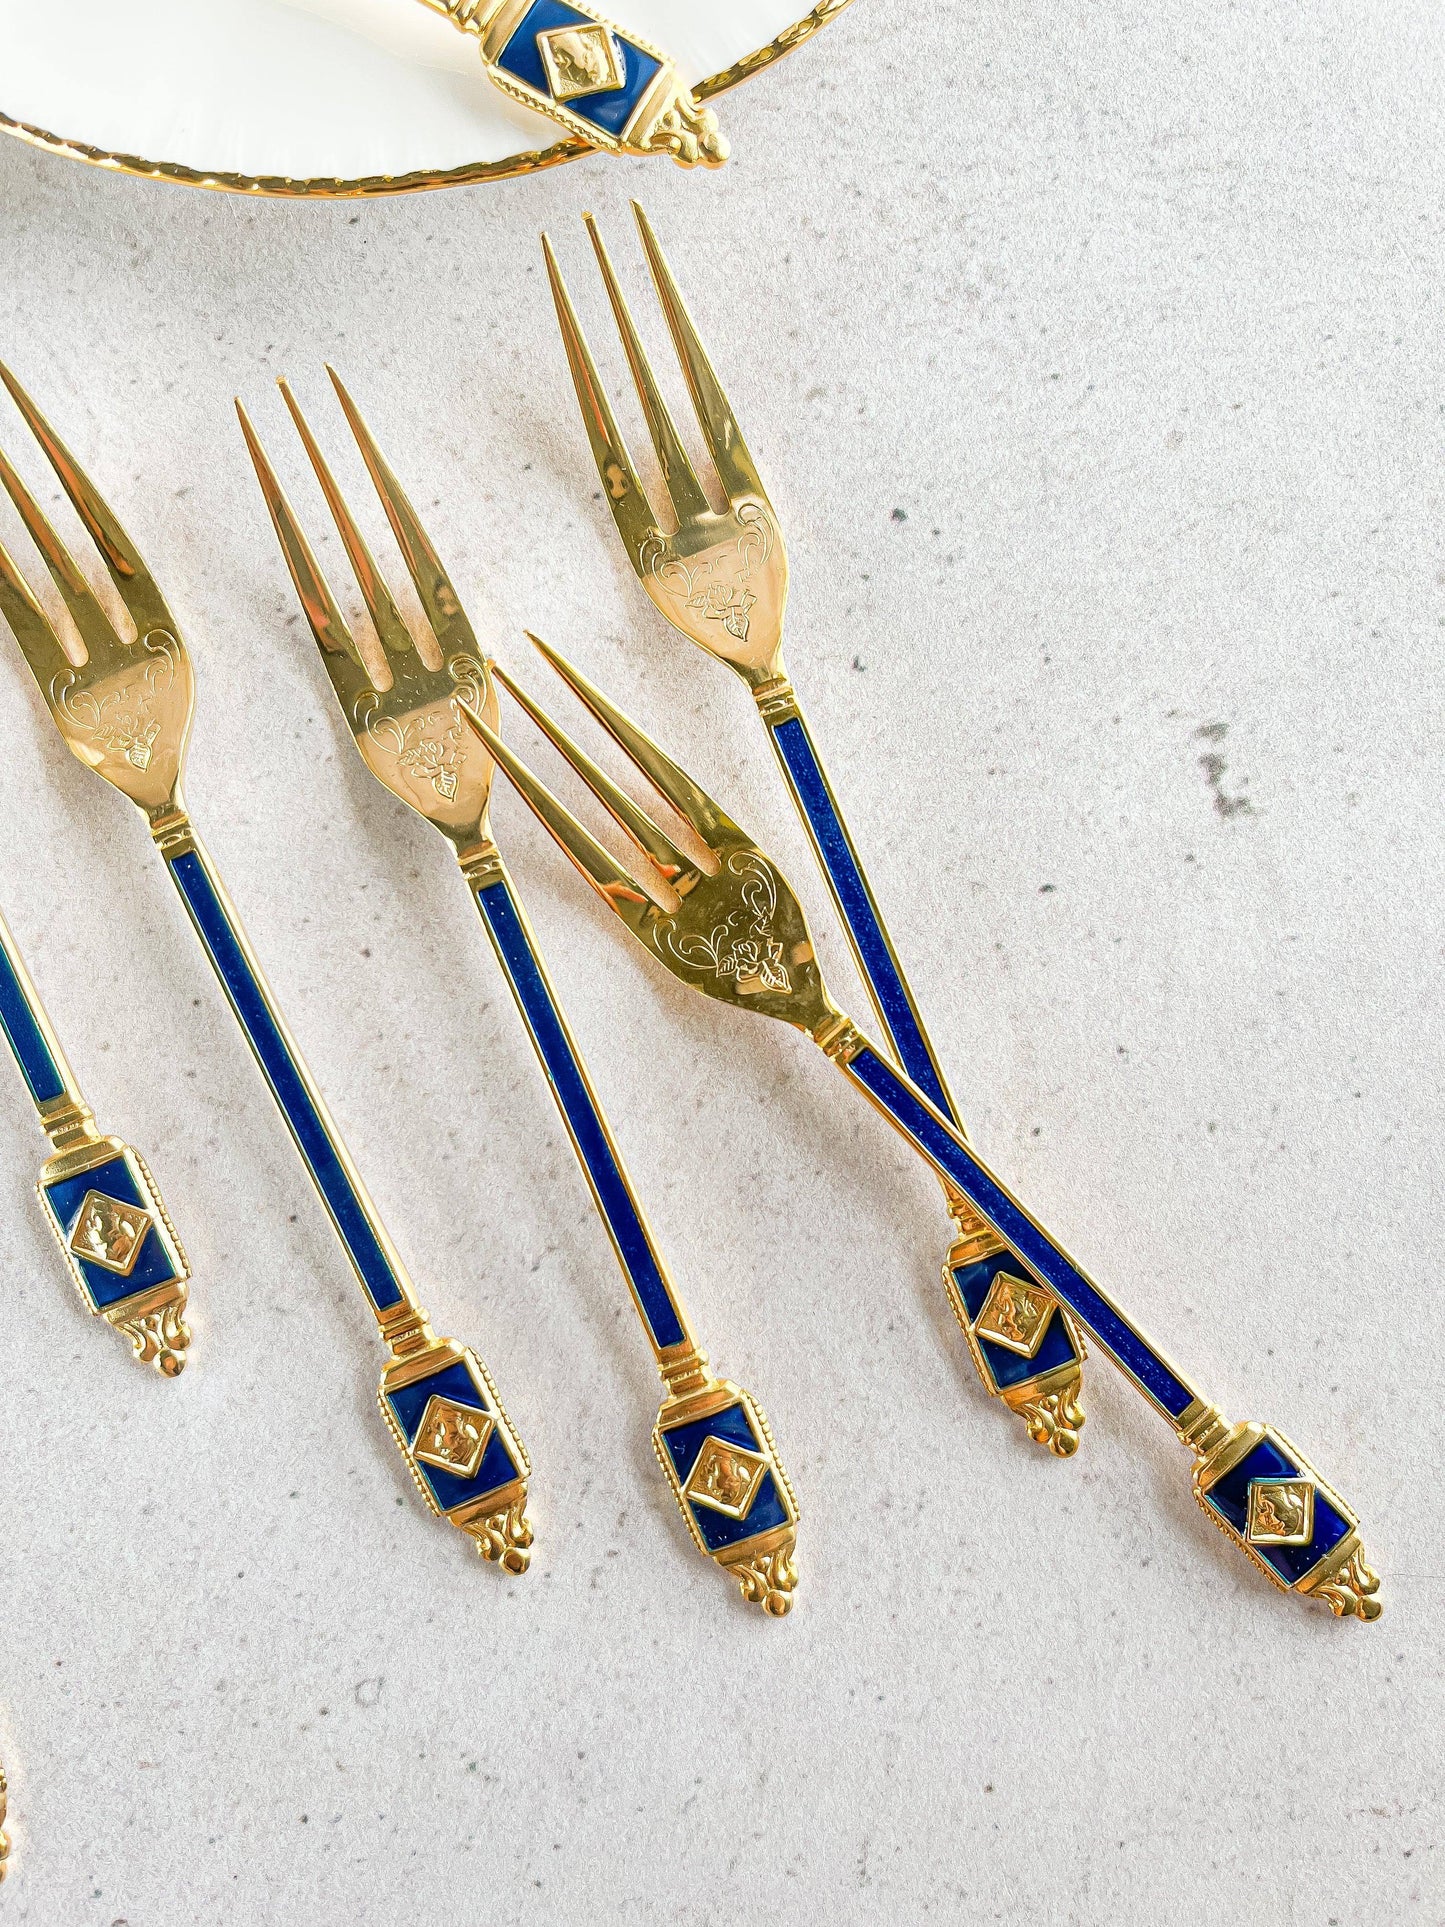 Eetrite 24ct Gold-plated Cutlery Set - SOSC Home